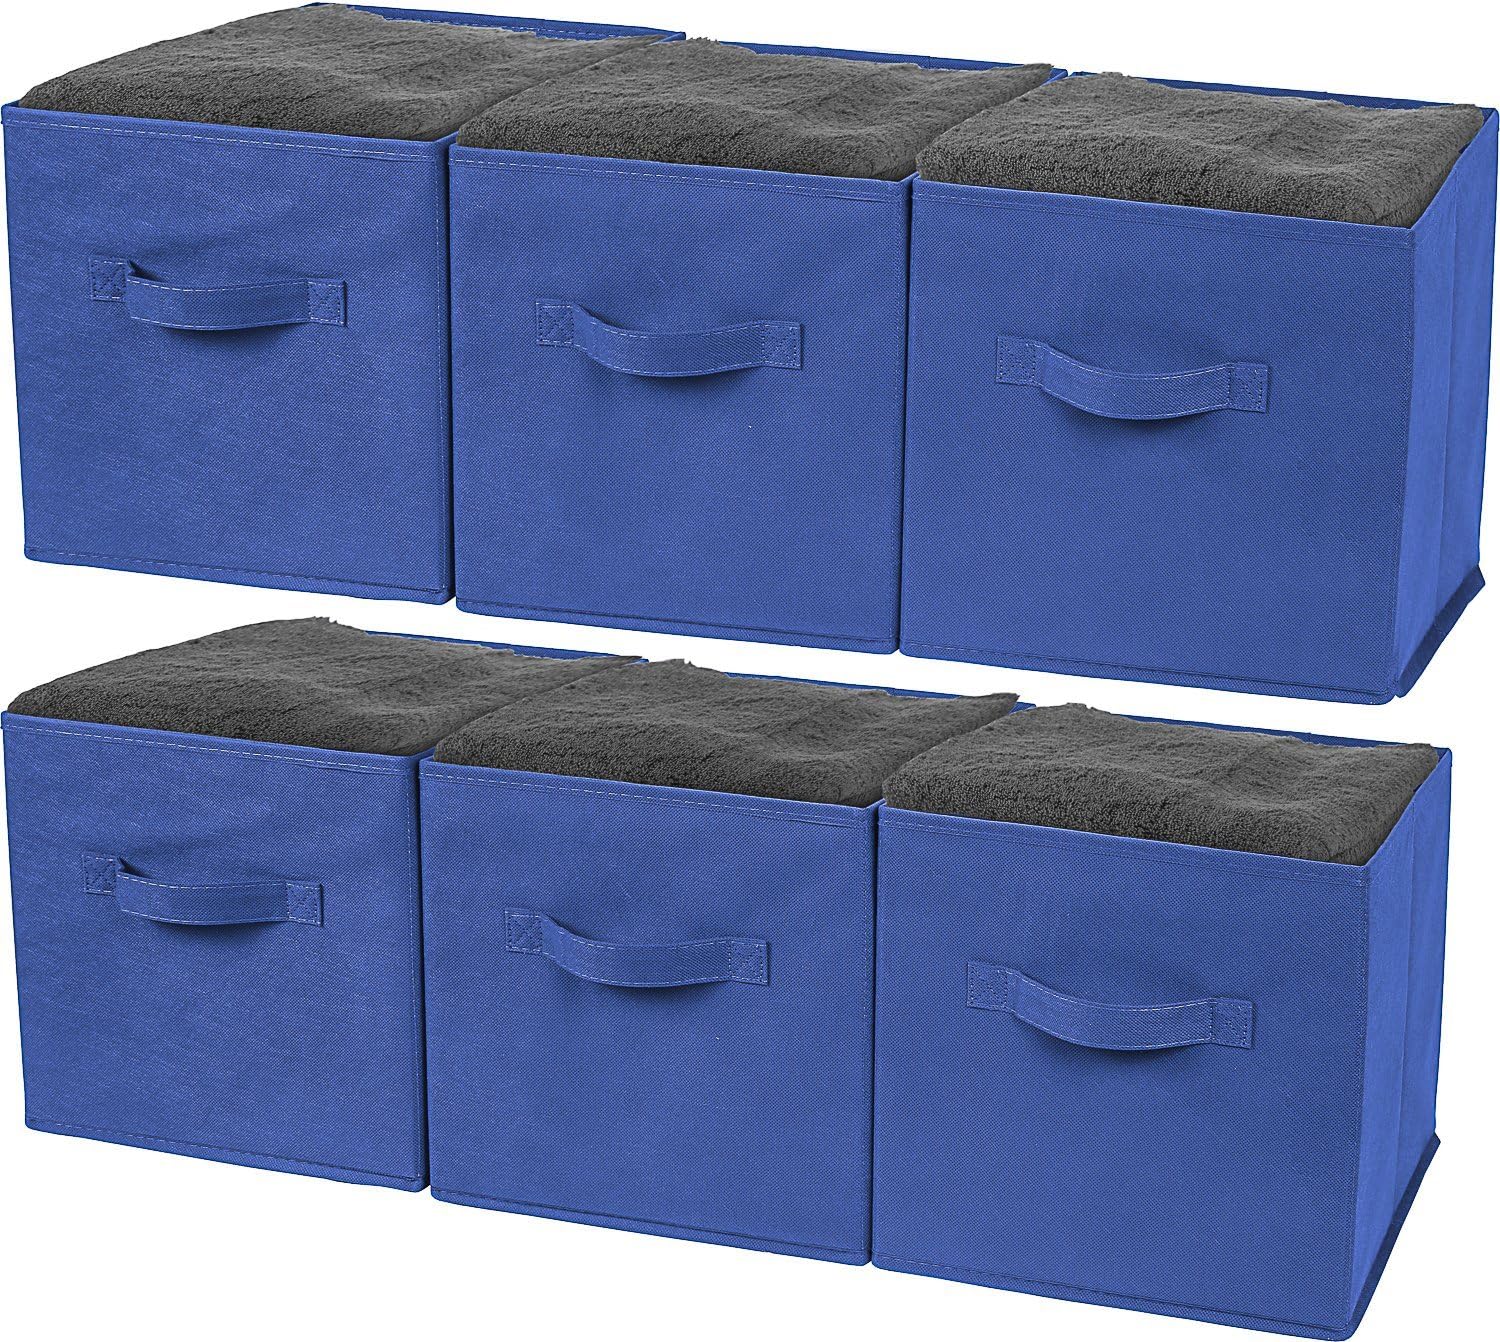 Greenco’s Foldable Storage Cubes